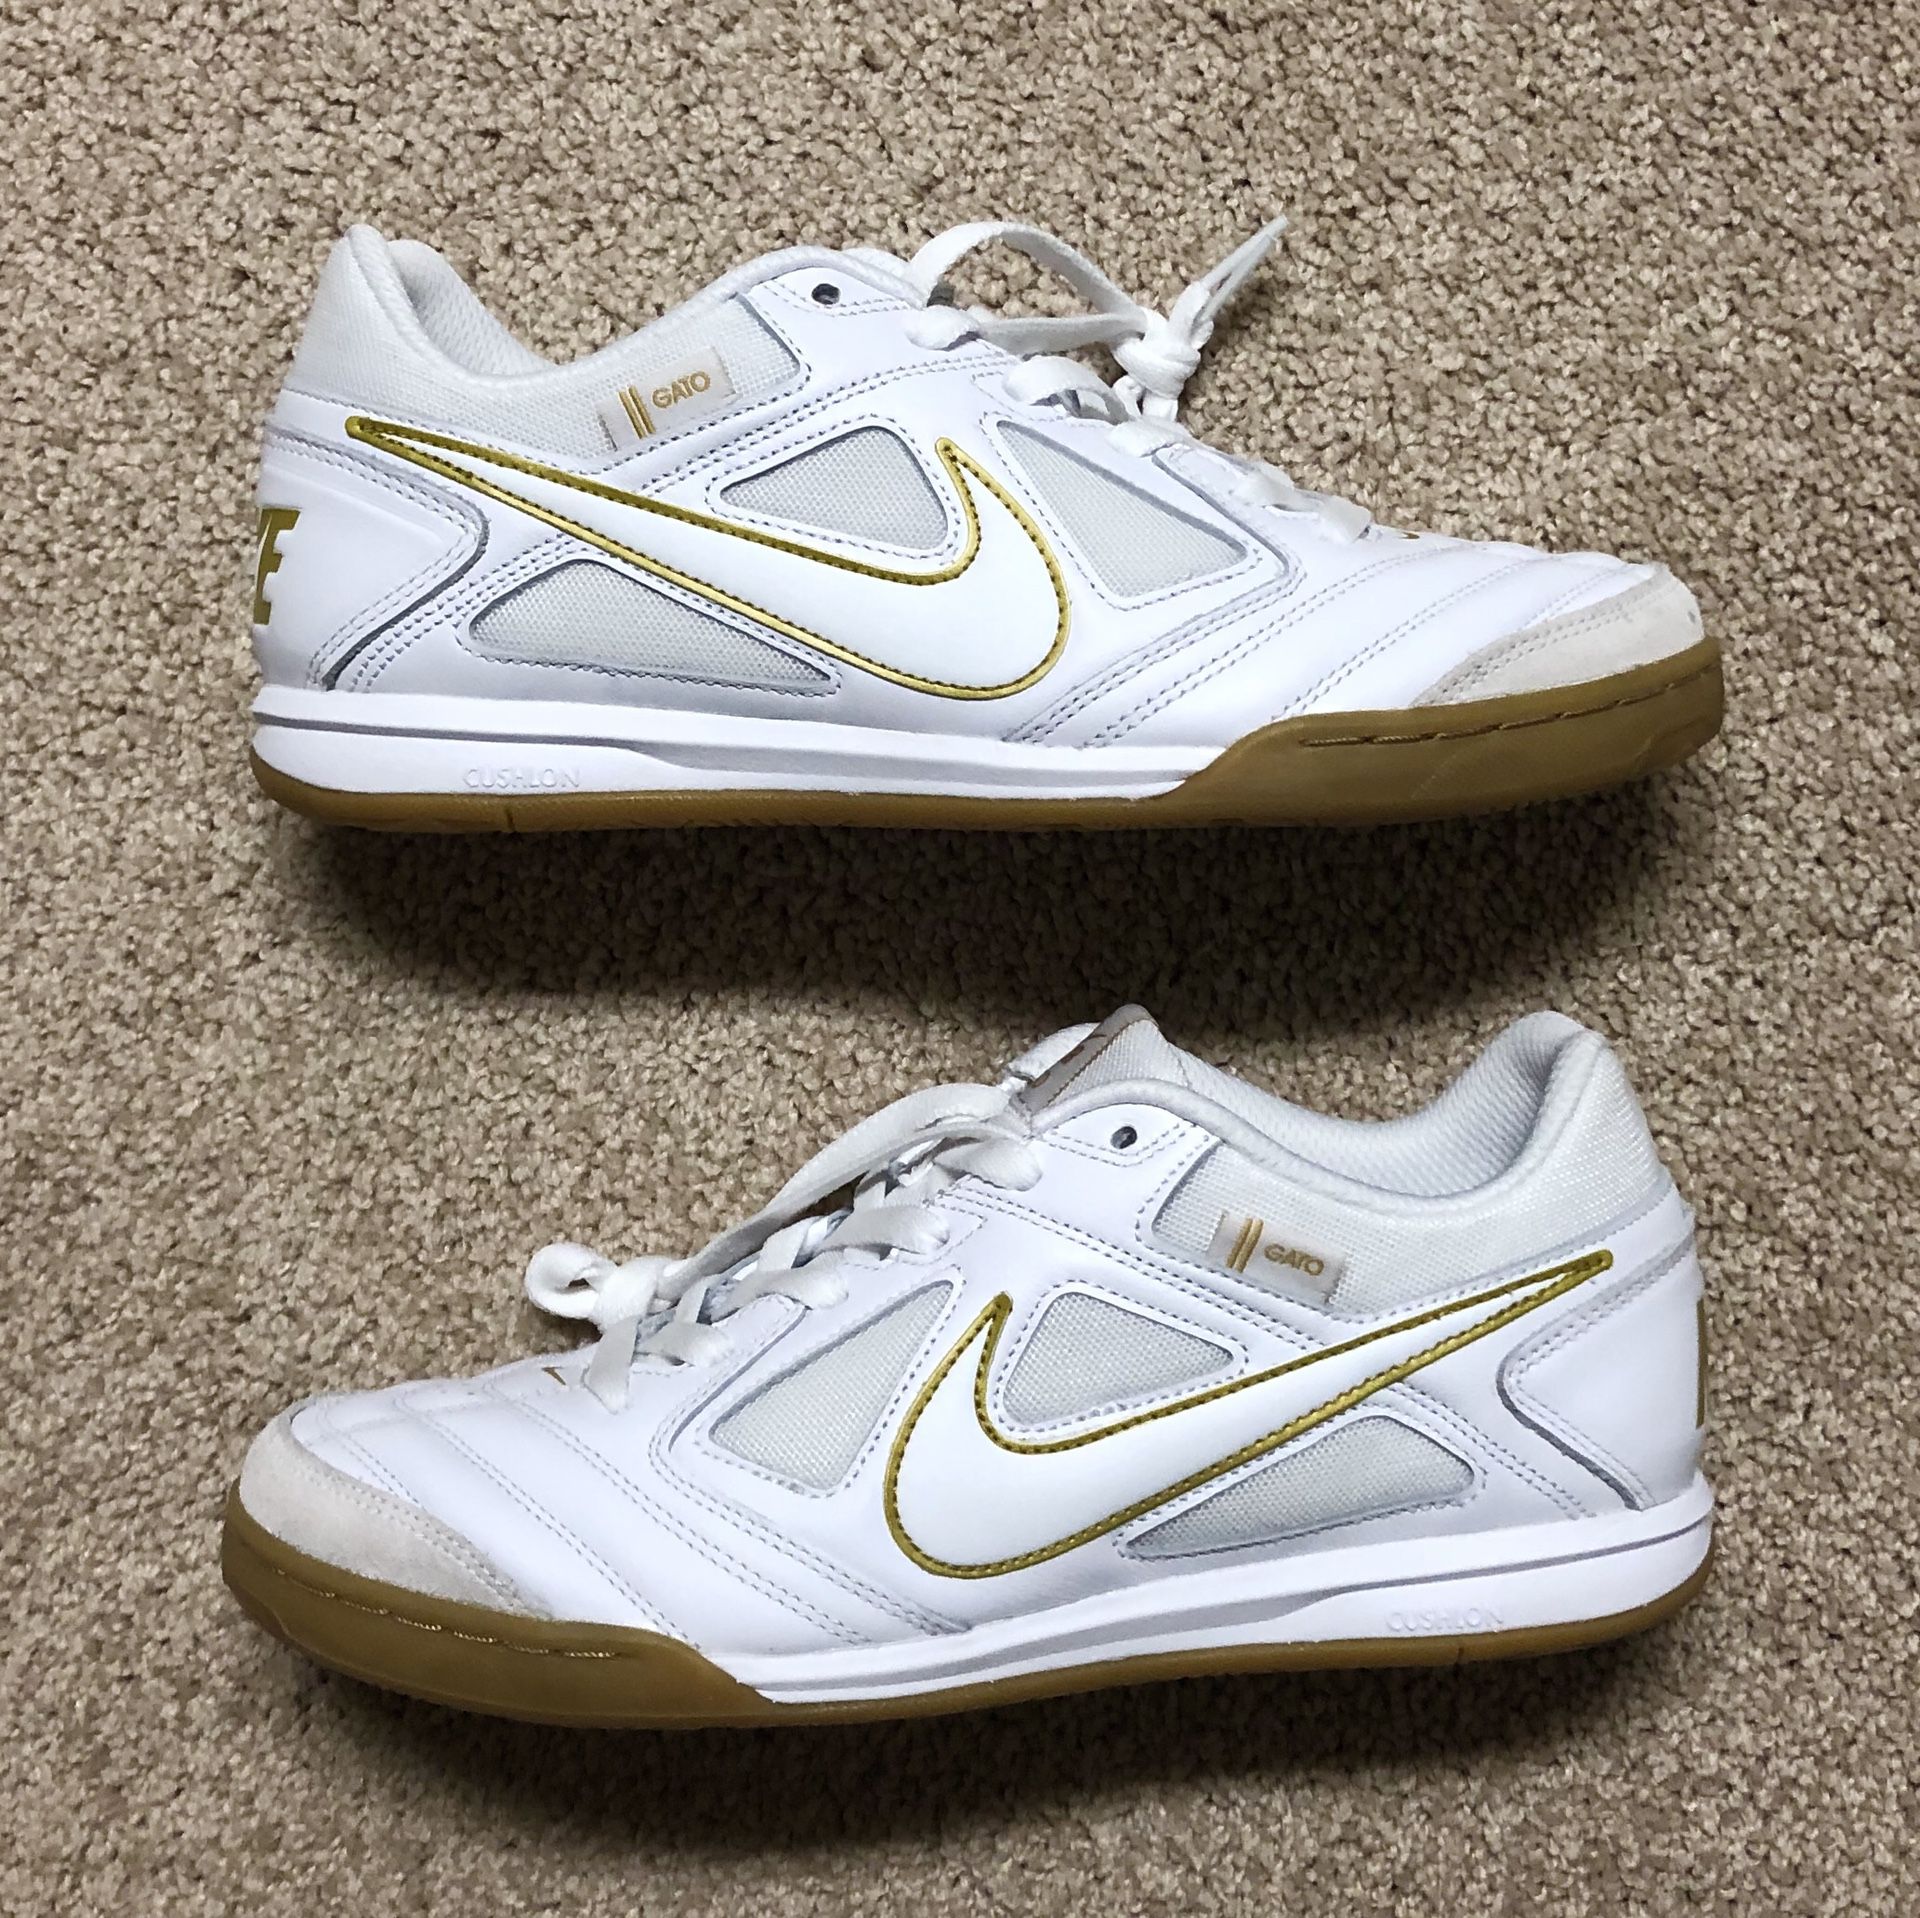 NWOB Nike Gato SB - White/Gold Skateboarding Shoes (AT4607-100) Men’s SZ 8.5